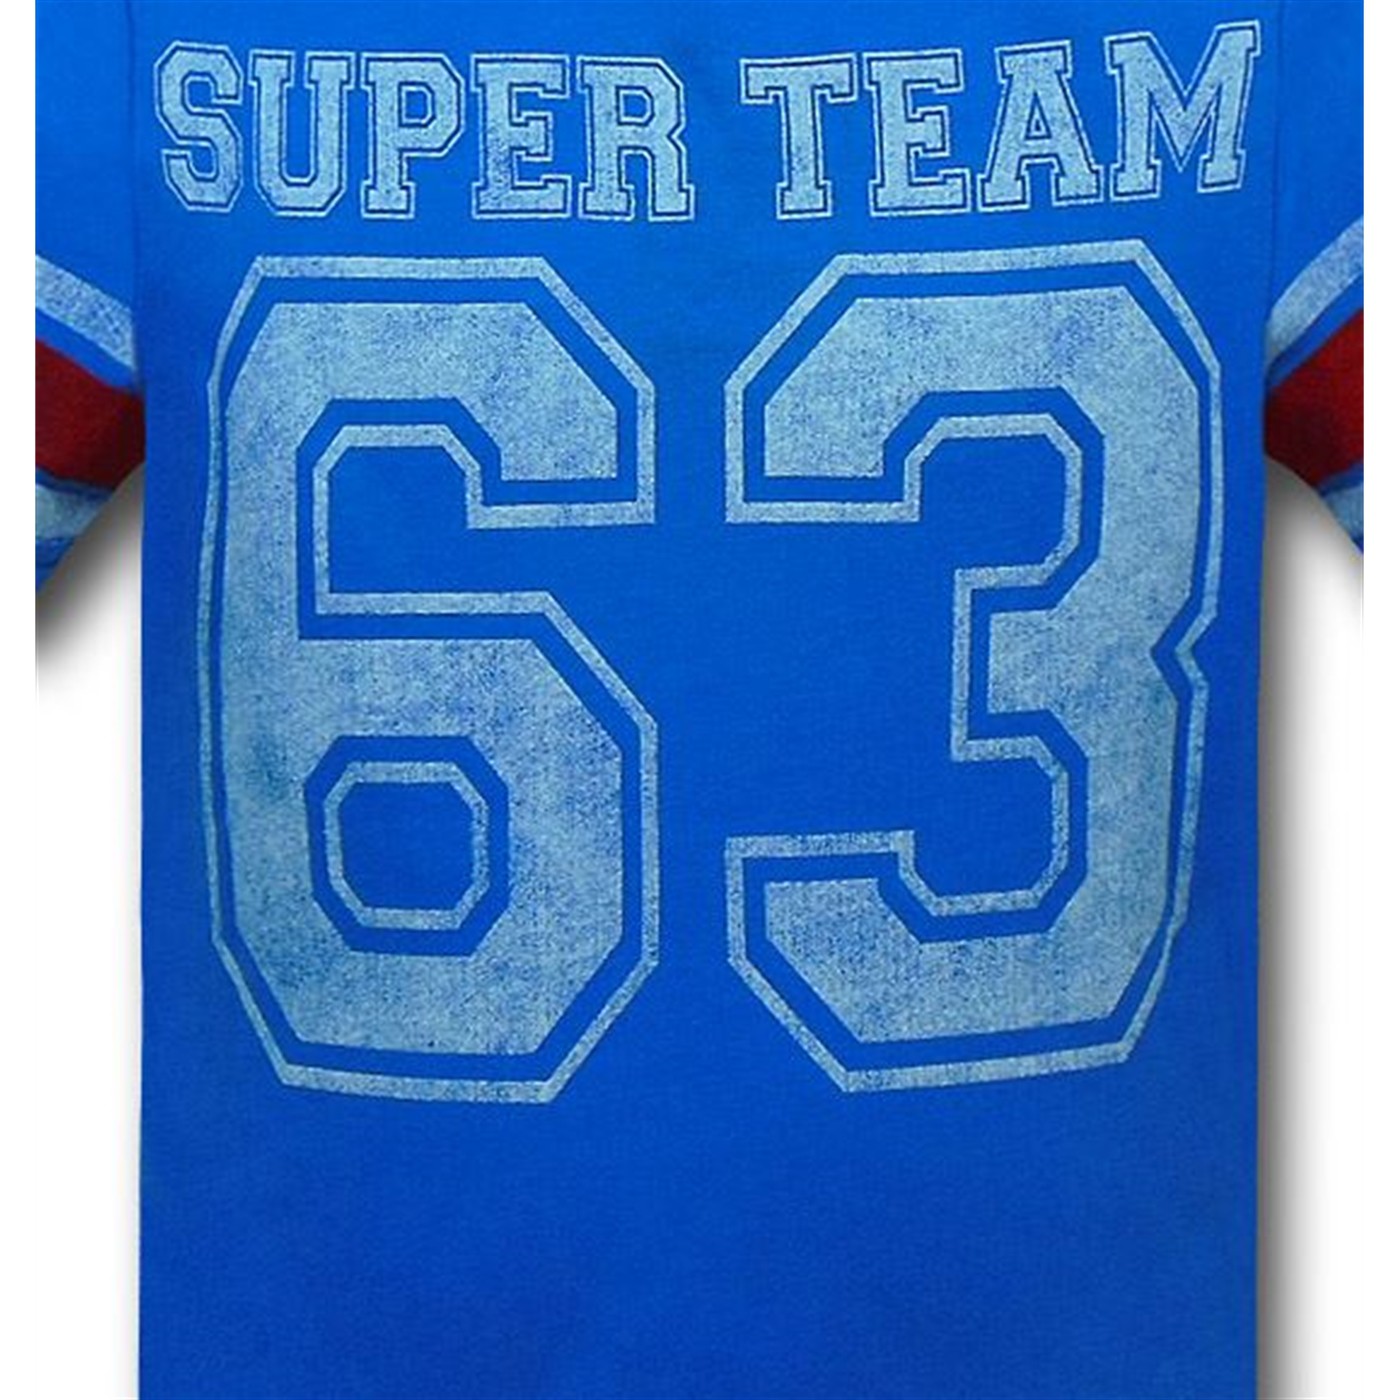 Spiderman Super Team Kids Blue T-Shirt